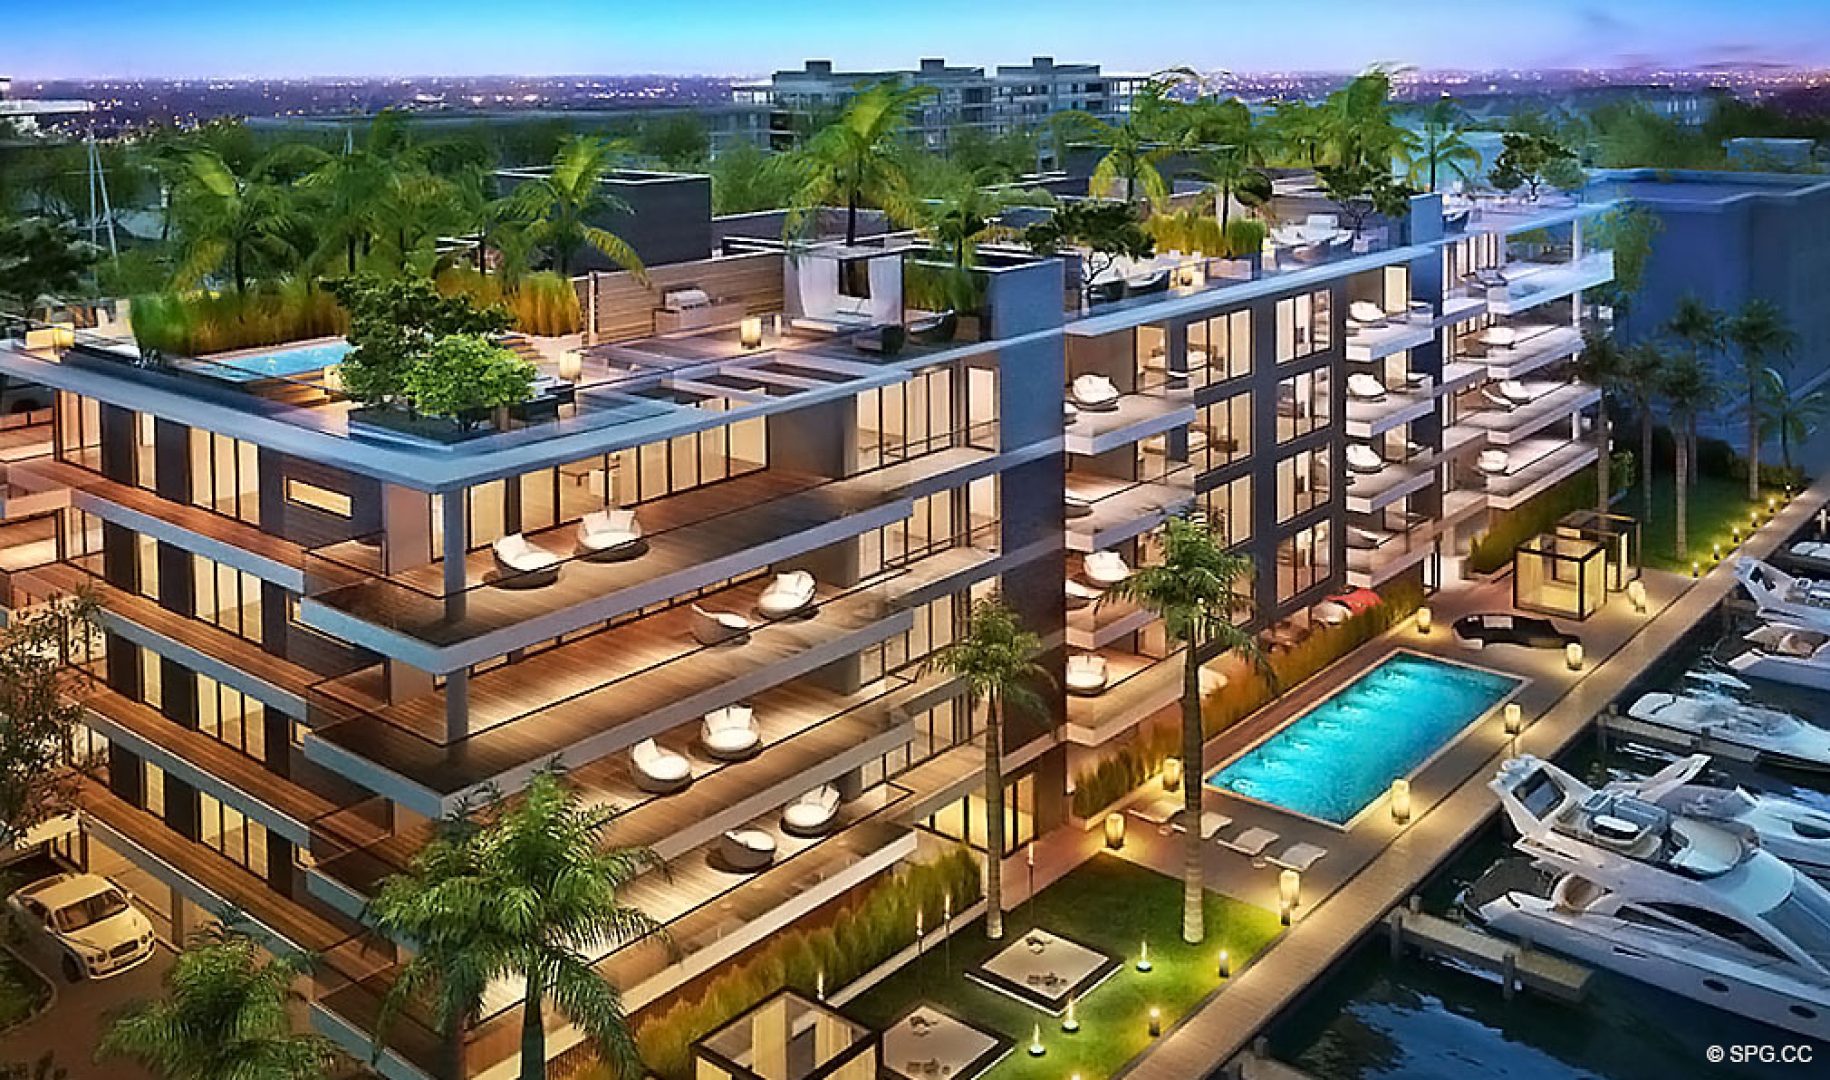 Expansive Private Terraces at AquaLuna Las Olas, Luxury Waterfront Condos in Fort Lauderdale, Florida 33301